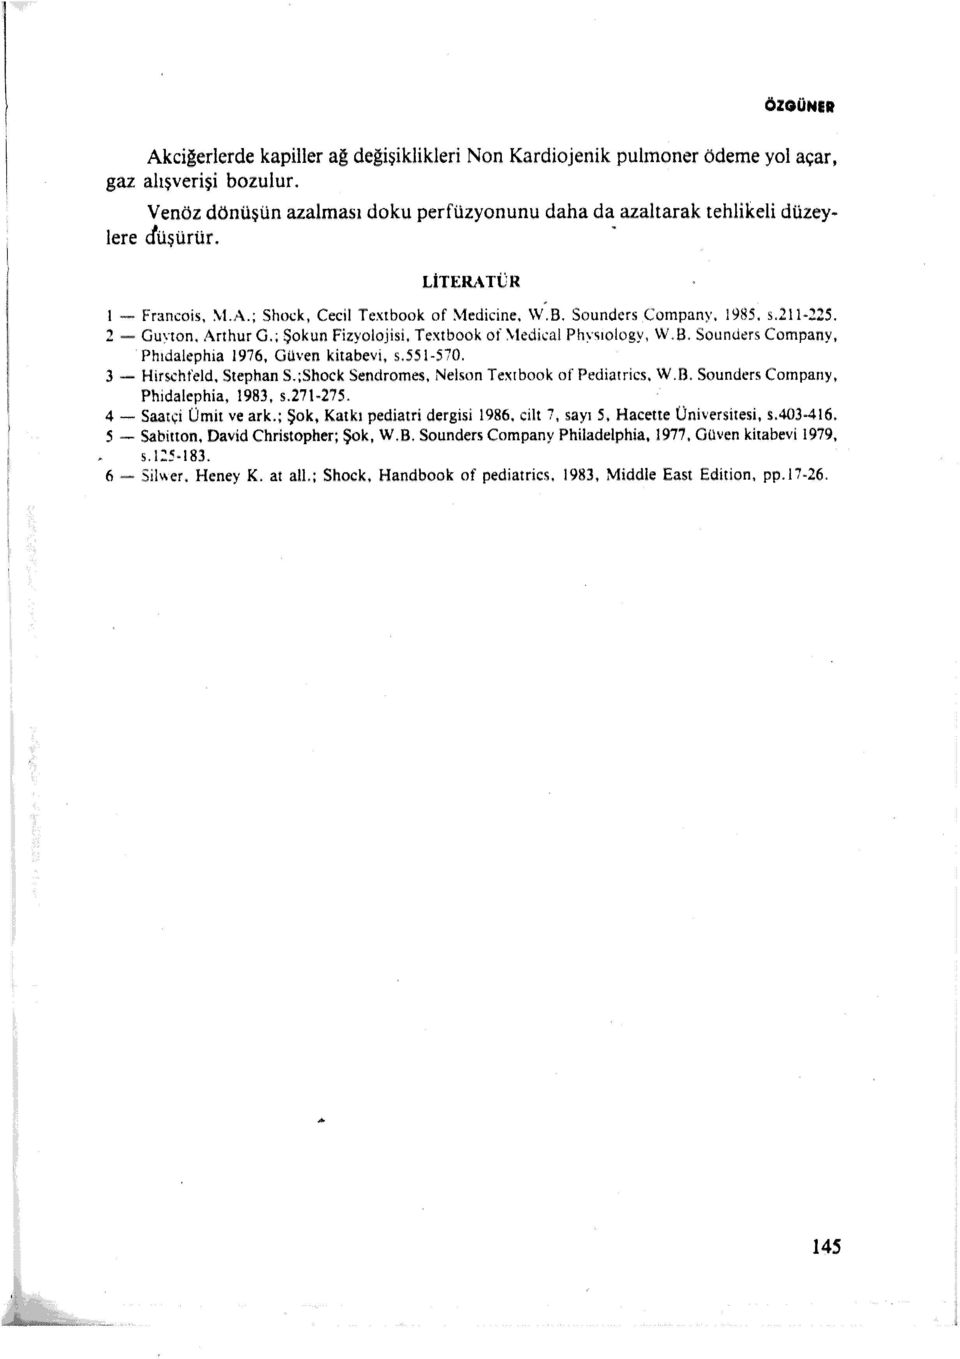 B. Sound<!rs Company, Phıdalephia 1976, Güven kitabevi, s.551-570. 3 - Hirschfeld. Stephan S.;Shock Scmdromes. Nelson Texrbook of Pediaırics. W.B. Sounders Company, Phidalephia, 1983, s.271-275.